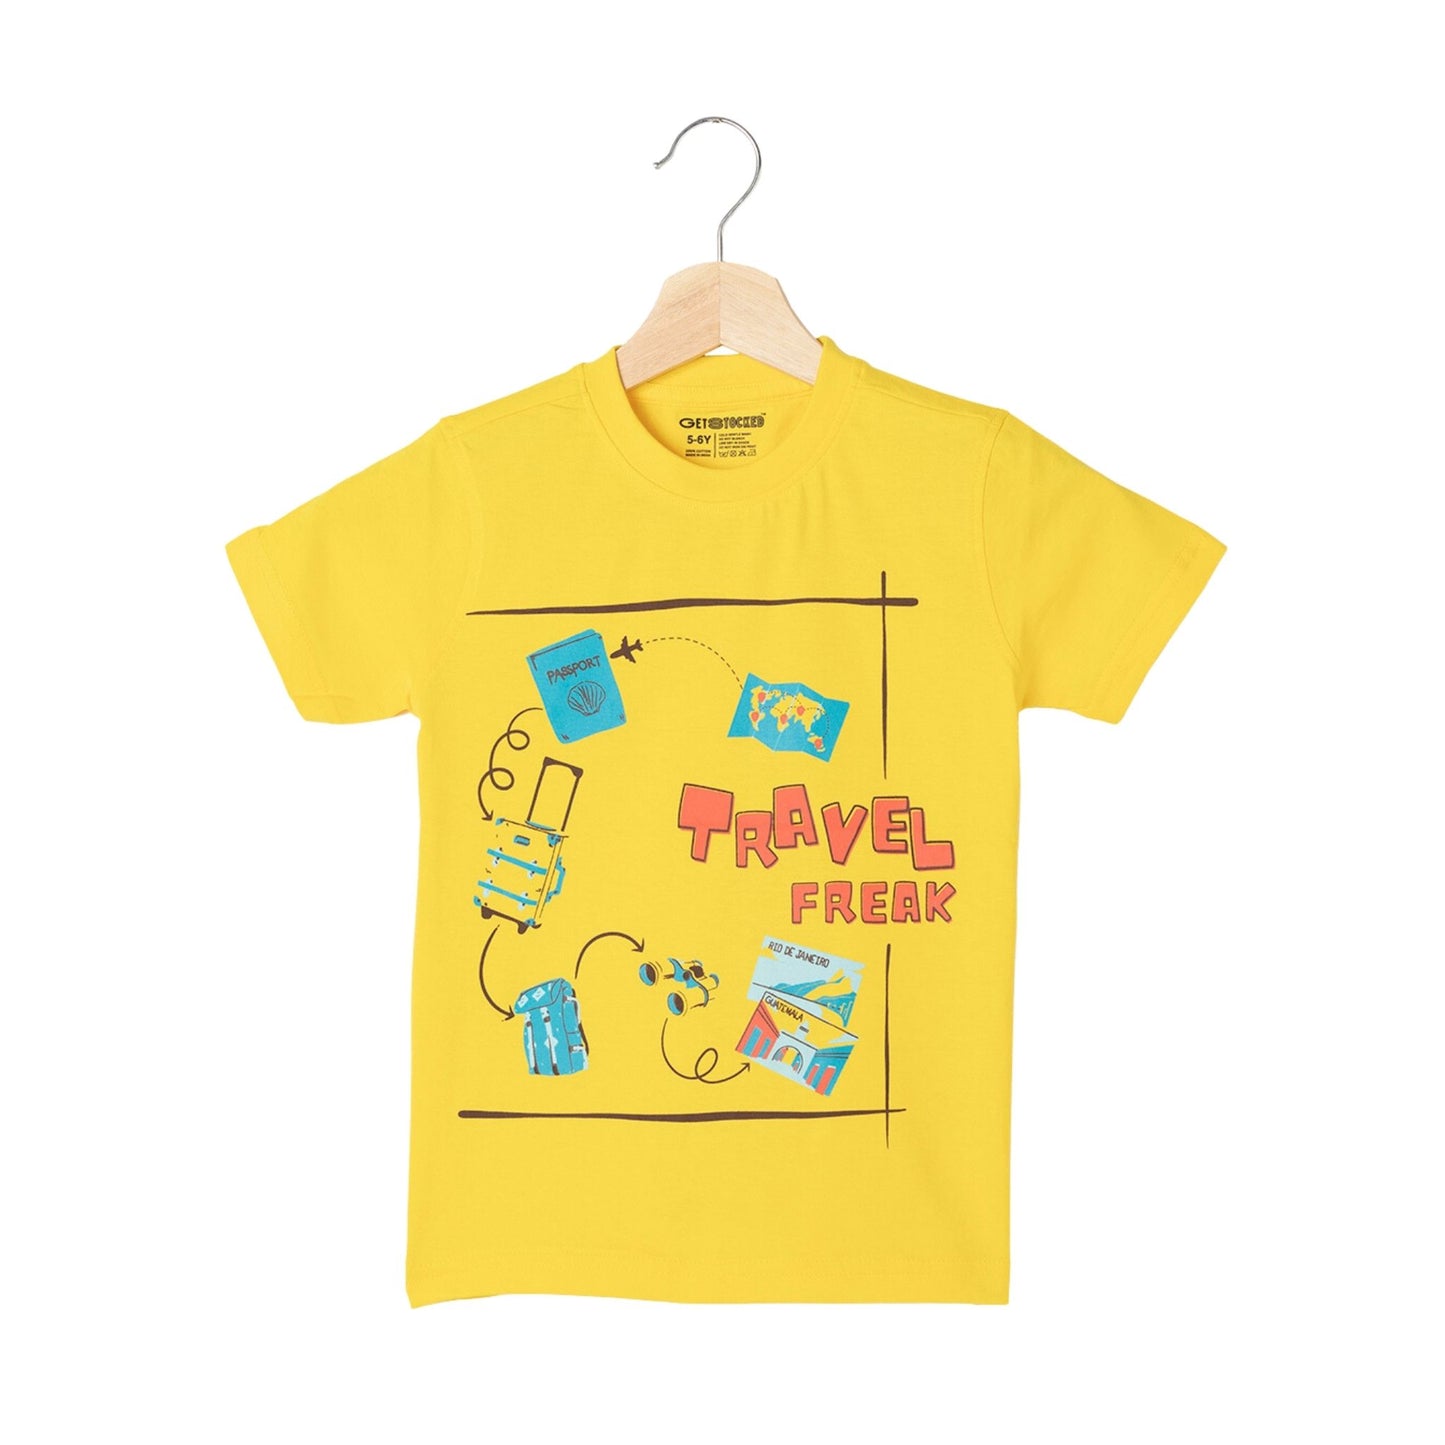 Travel Freak Print Boys Cotton T-Shirt (Yellow)